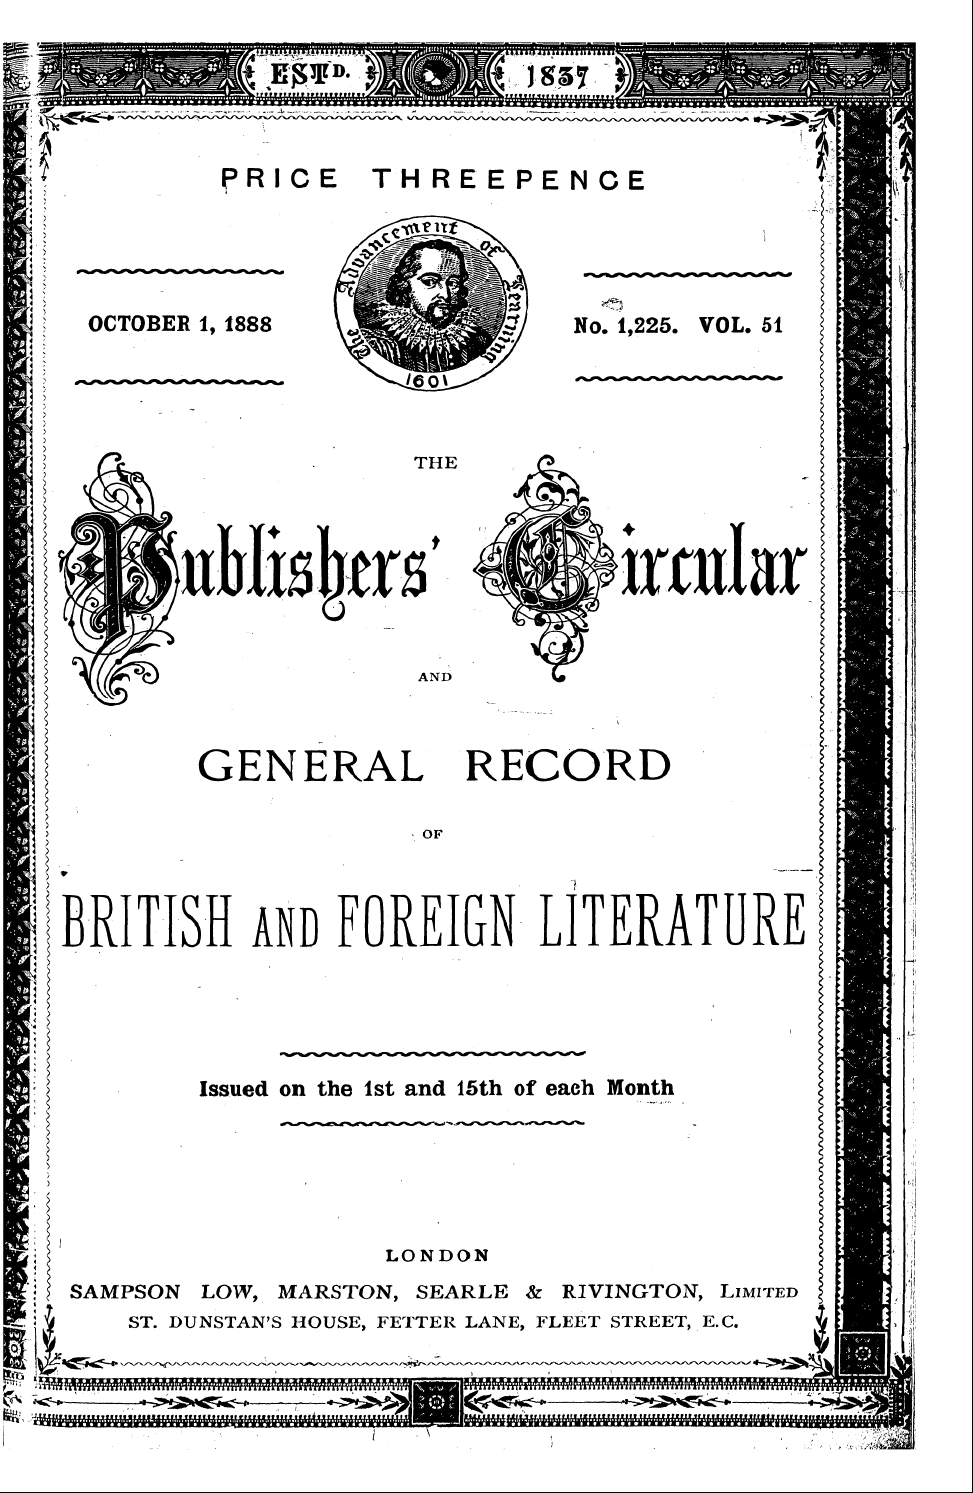 Publishers’ Circular (1880-1890): jS F Y, 1st edition - Ip Im Mj, Price Threepence W